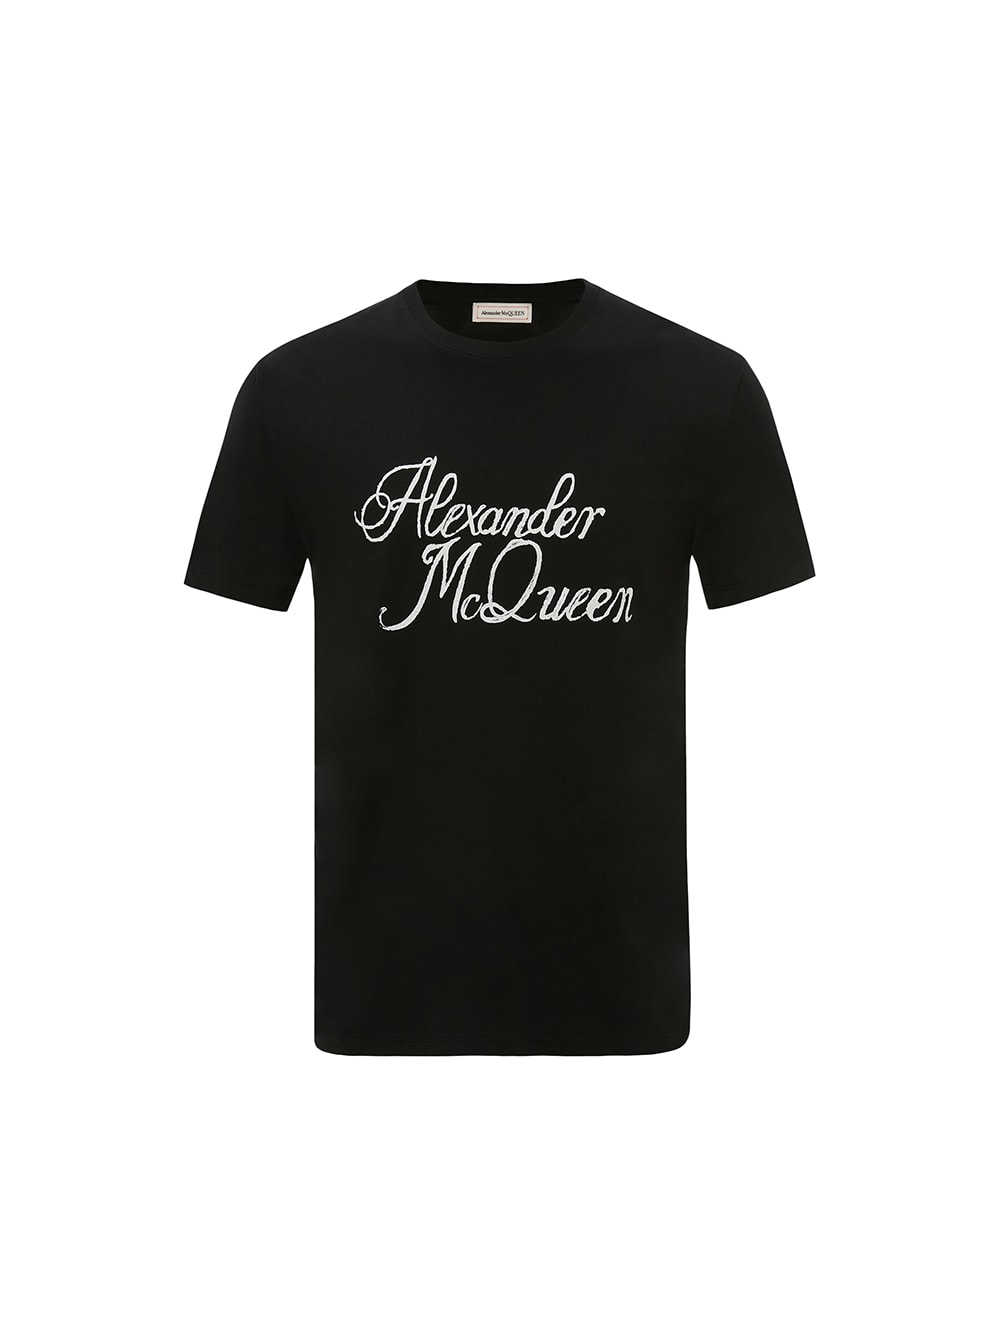 Man Black T-shirt With Alexander Mcqueen Signature